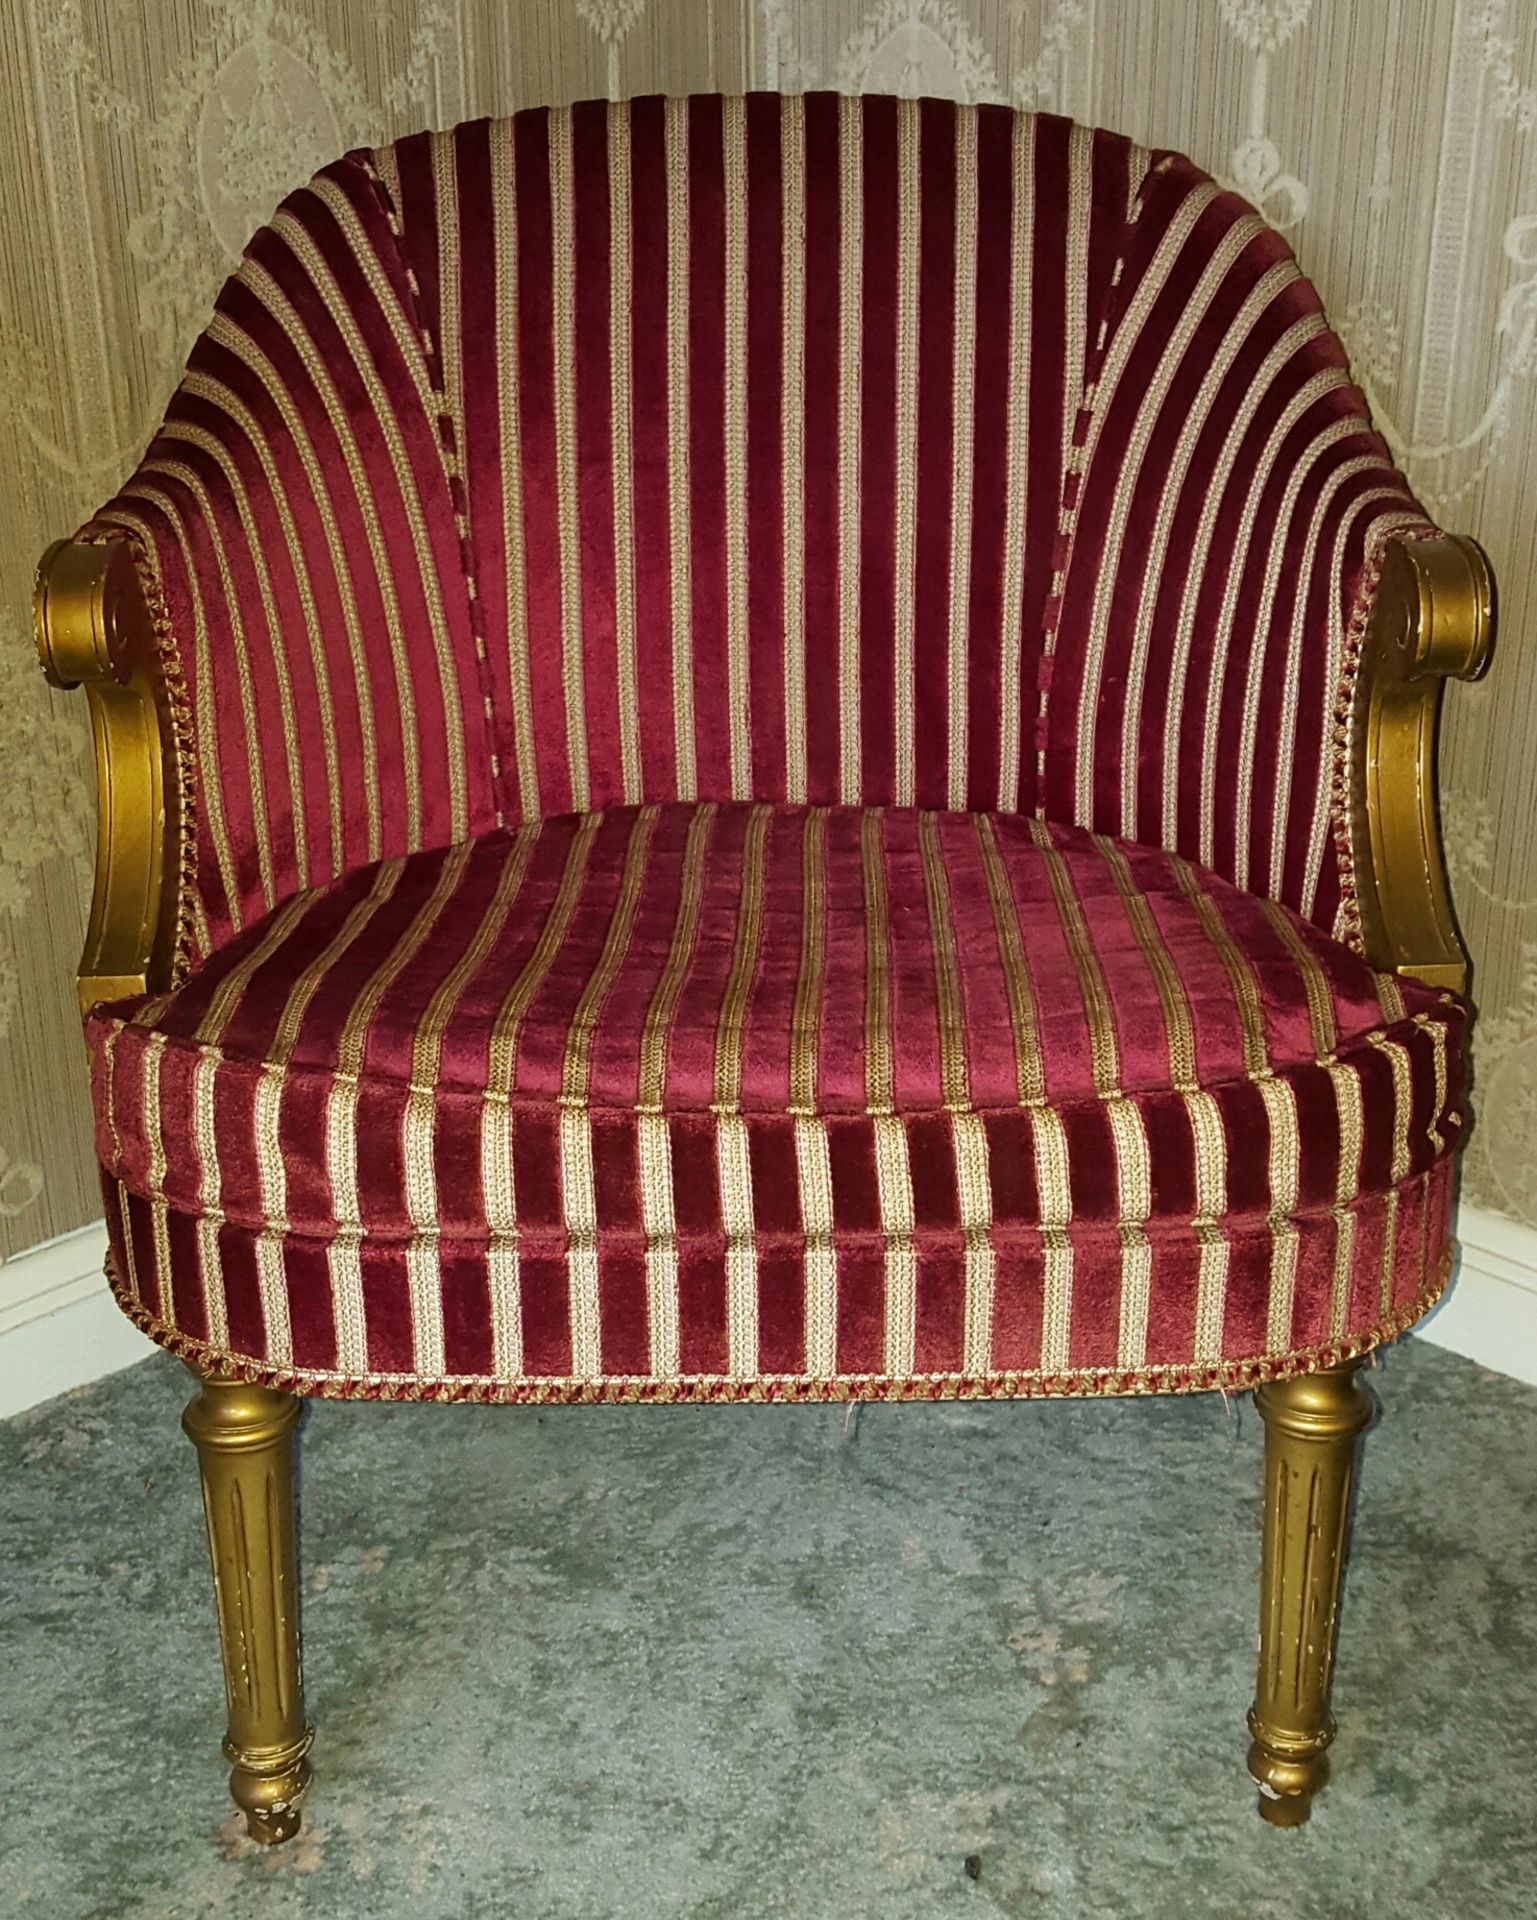 Ornate Retro Vintage Bedroom Chair